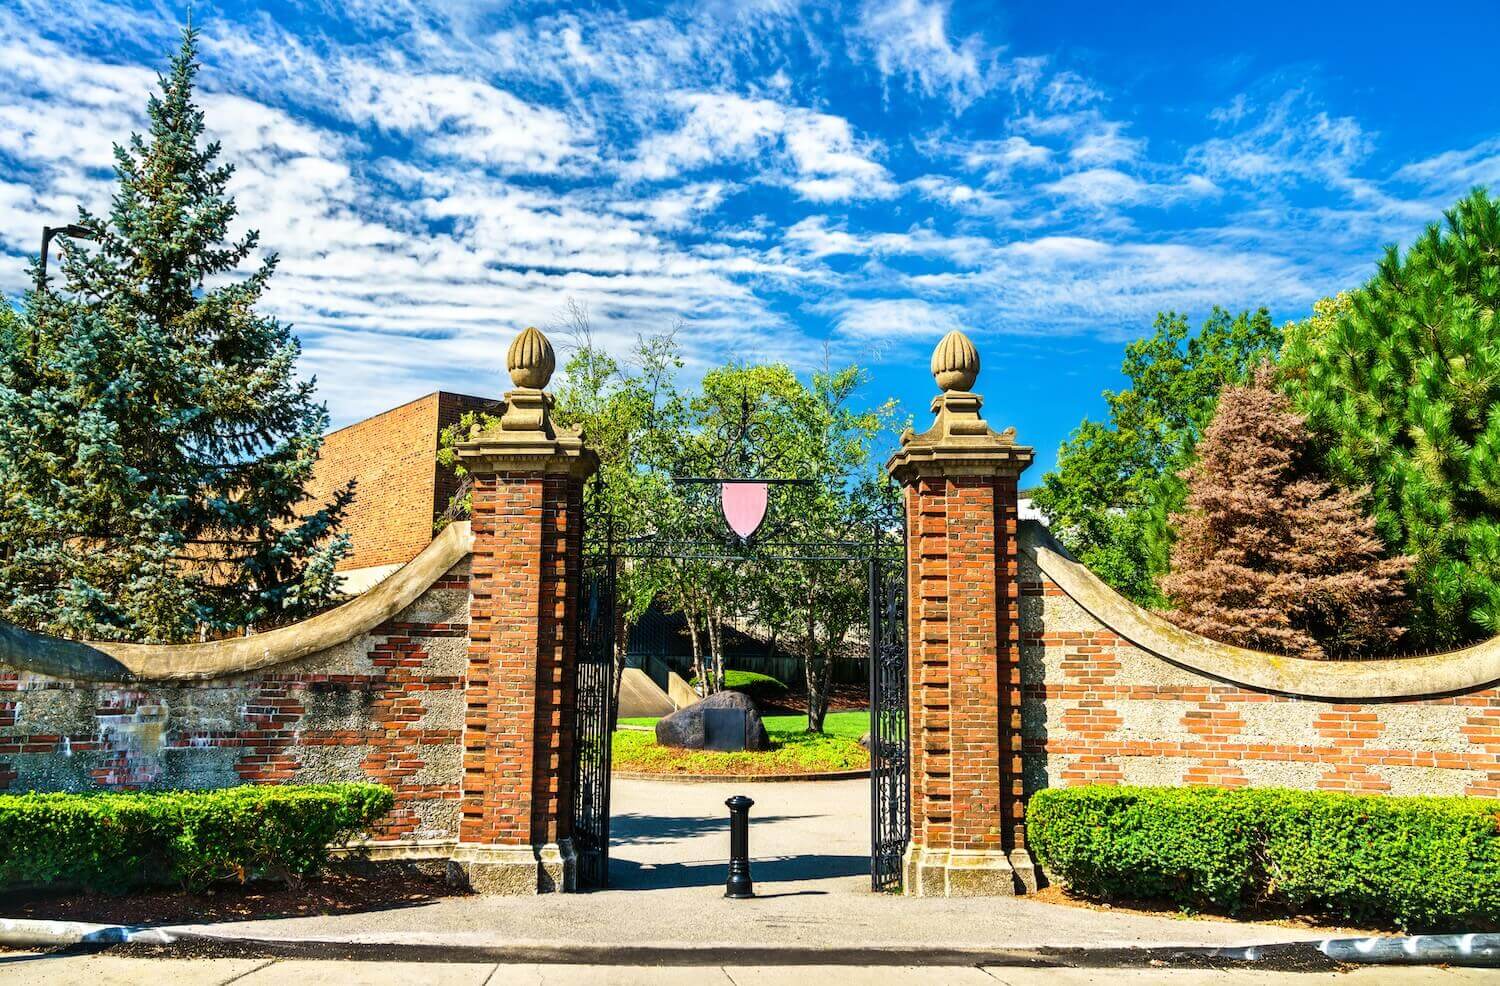 Entrance Gate to Harvard University in Cambridge Massachusetts, United States.